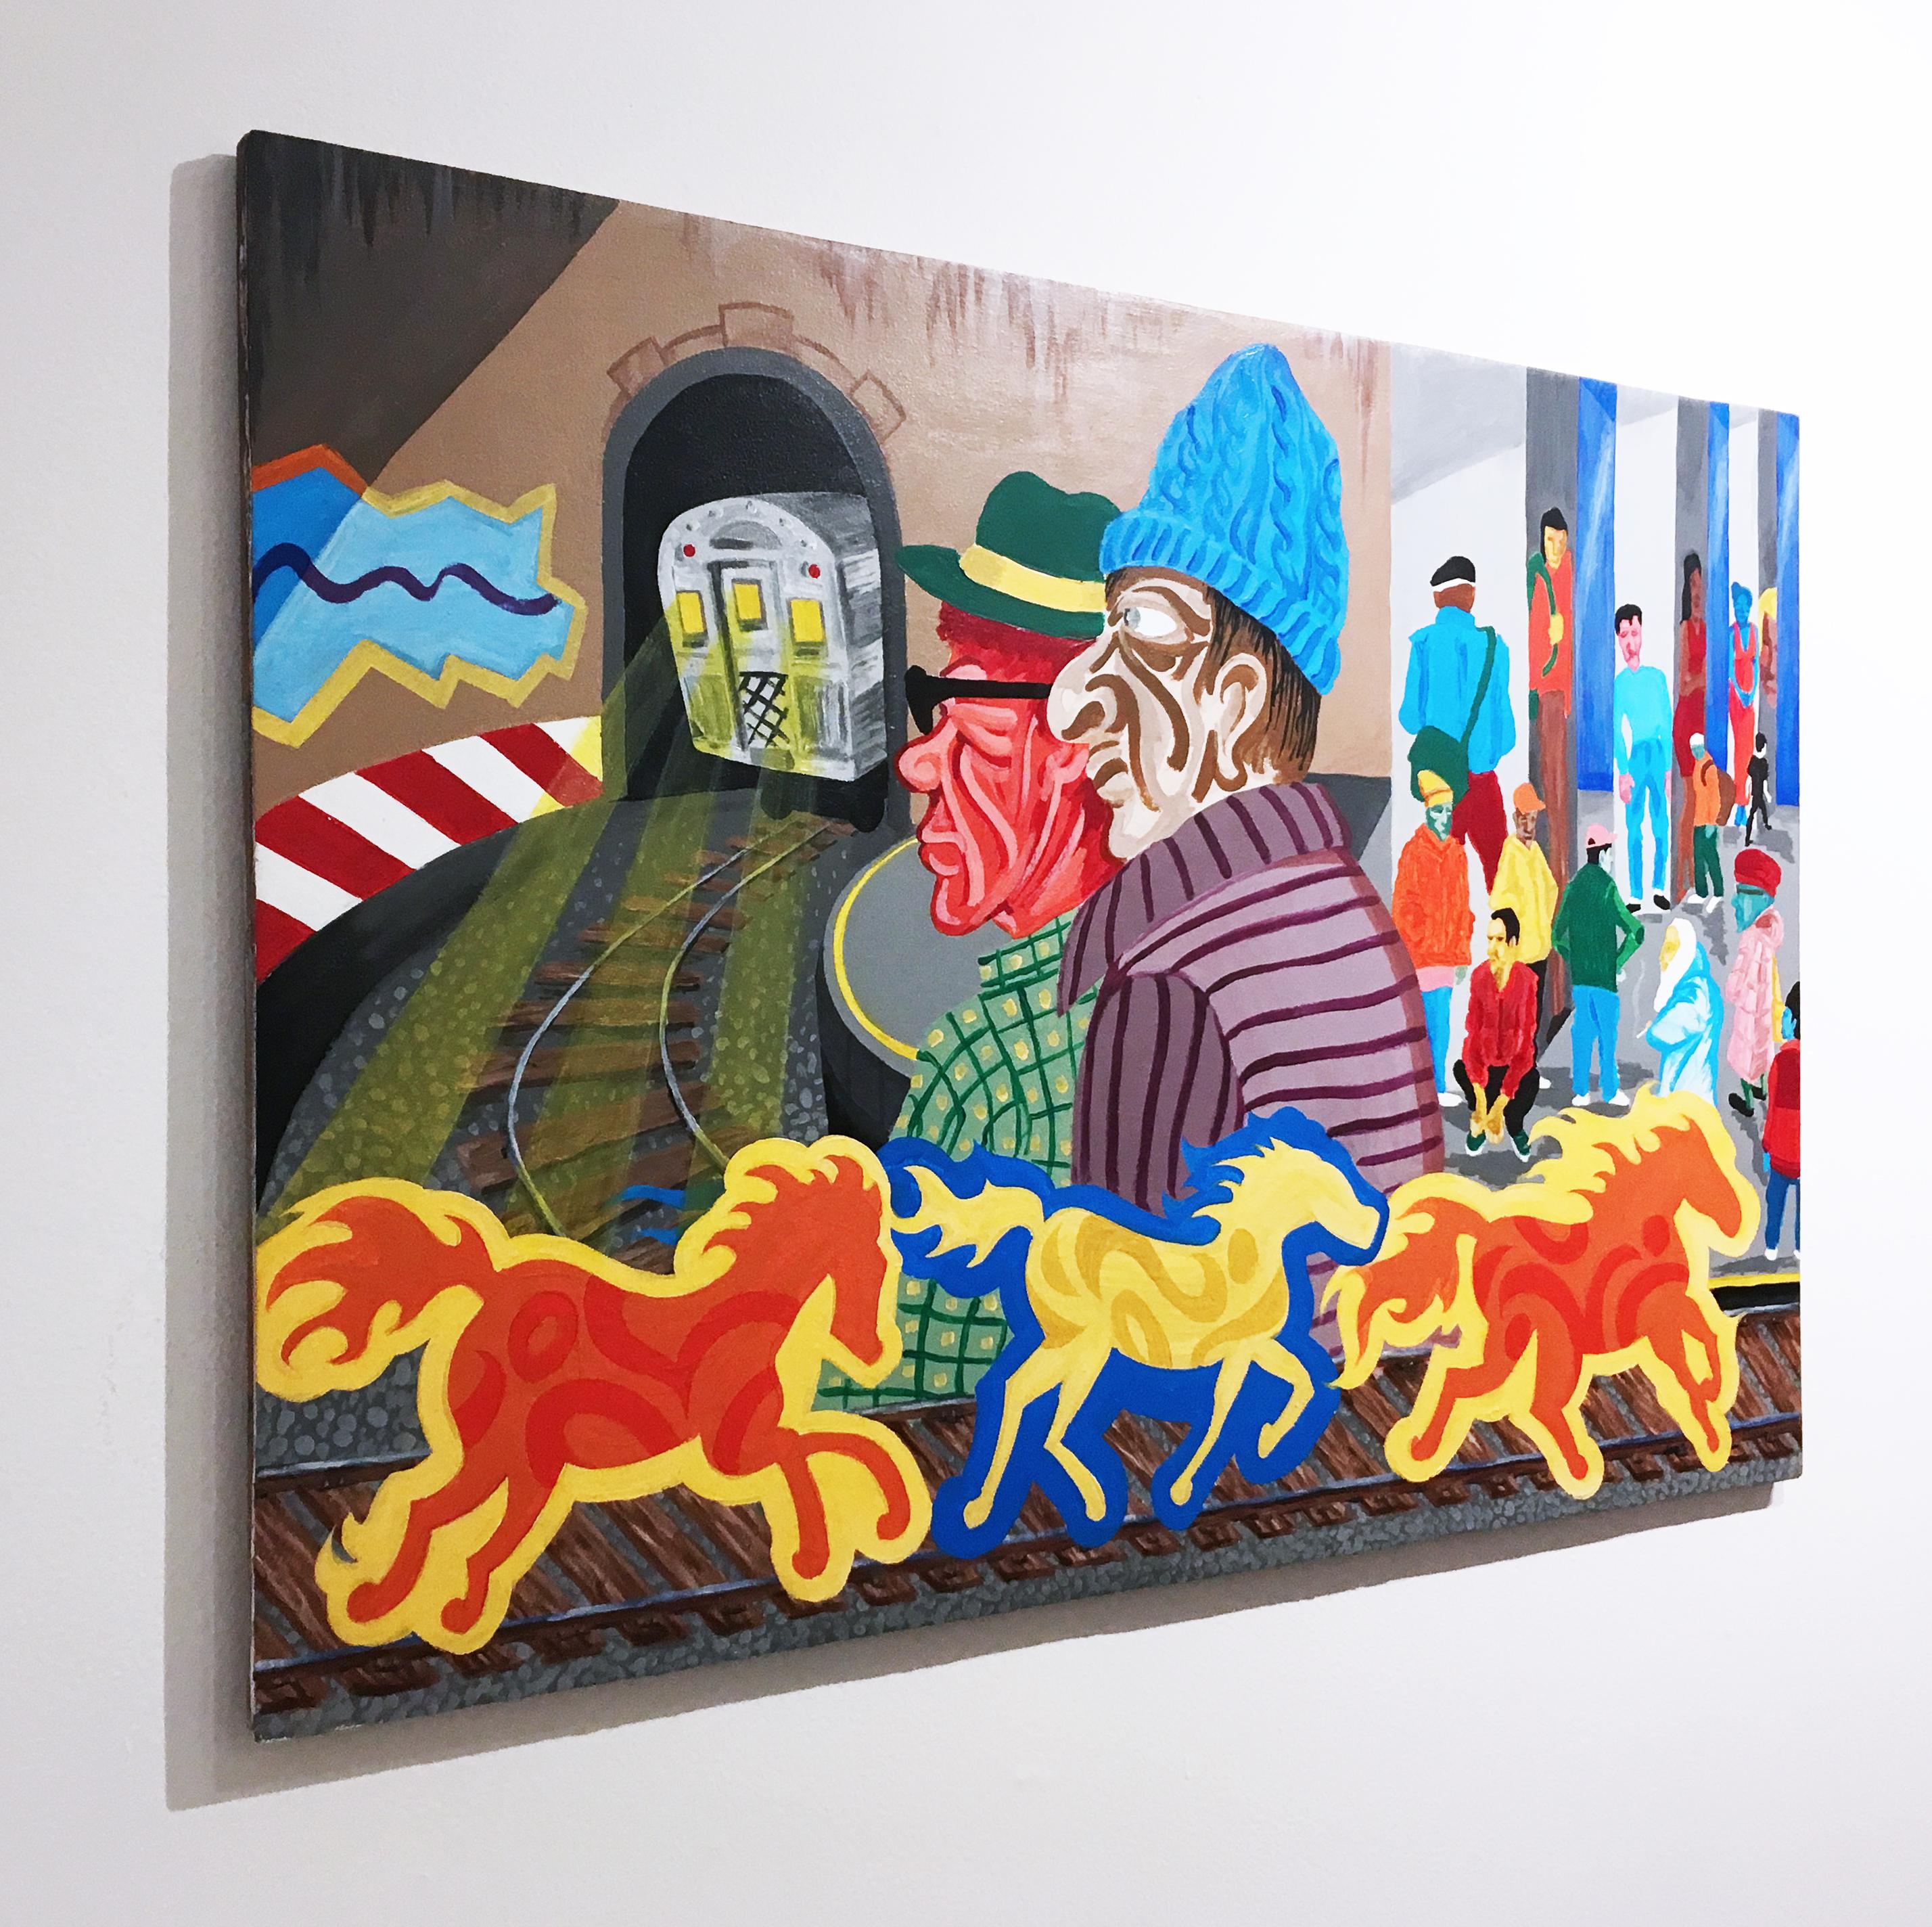 WILD HORSES, 2016, subway train, curve, graffiti, street art, figurative, panel - Painting by Sam Meyerson